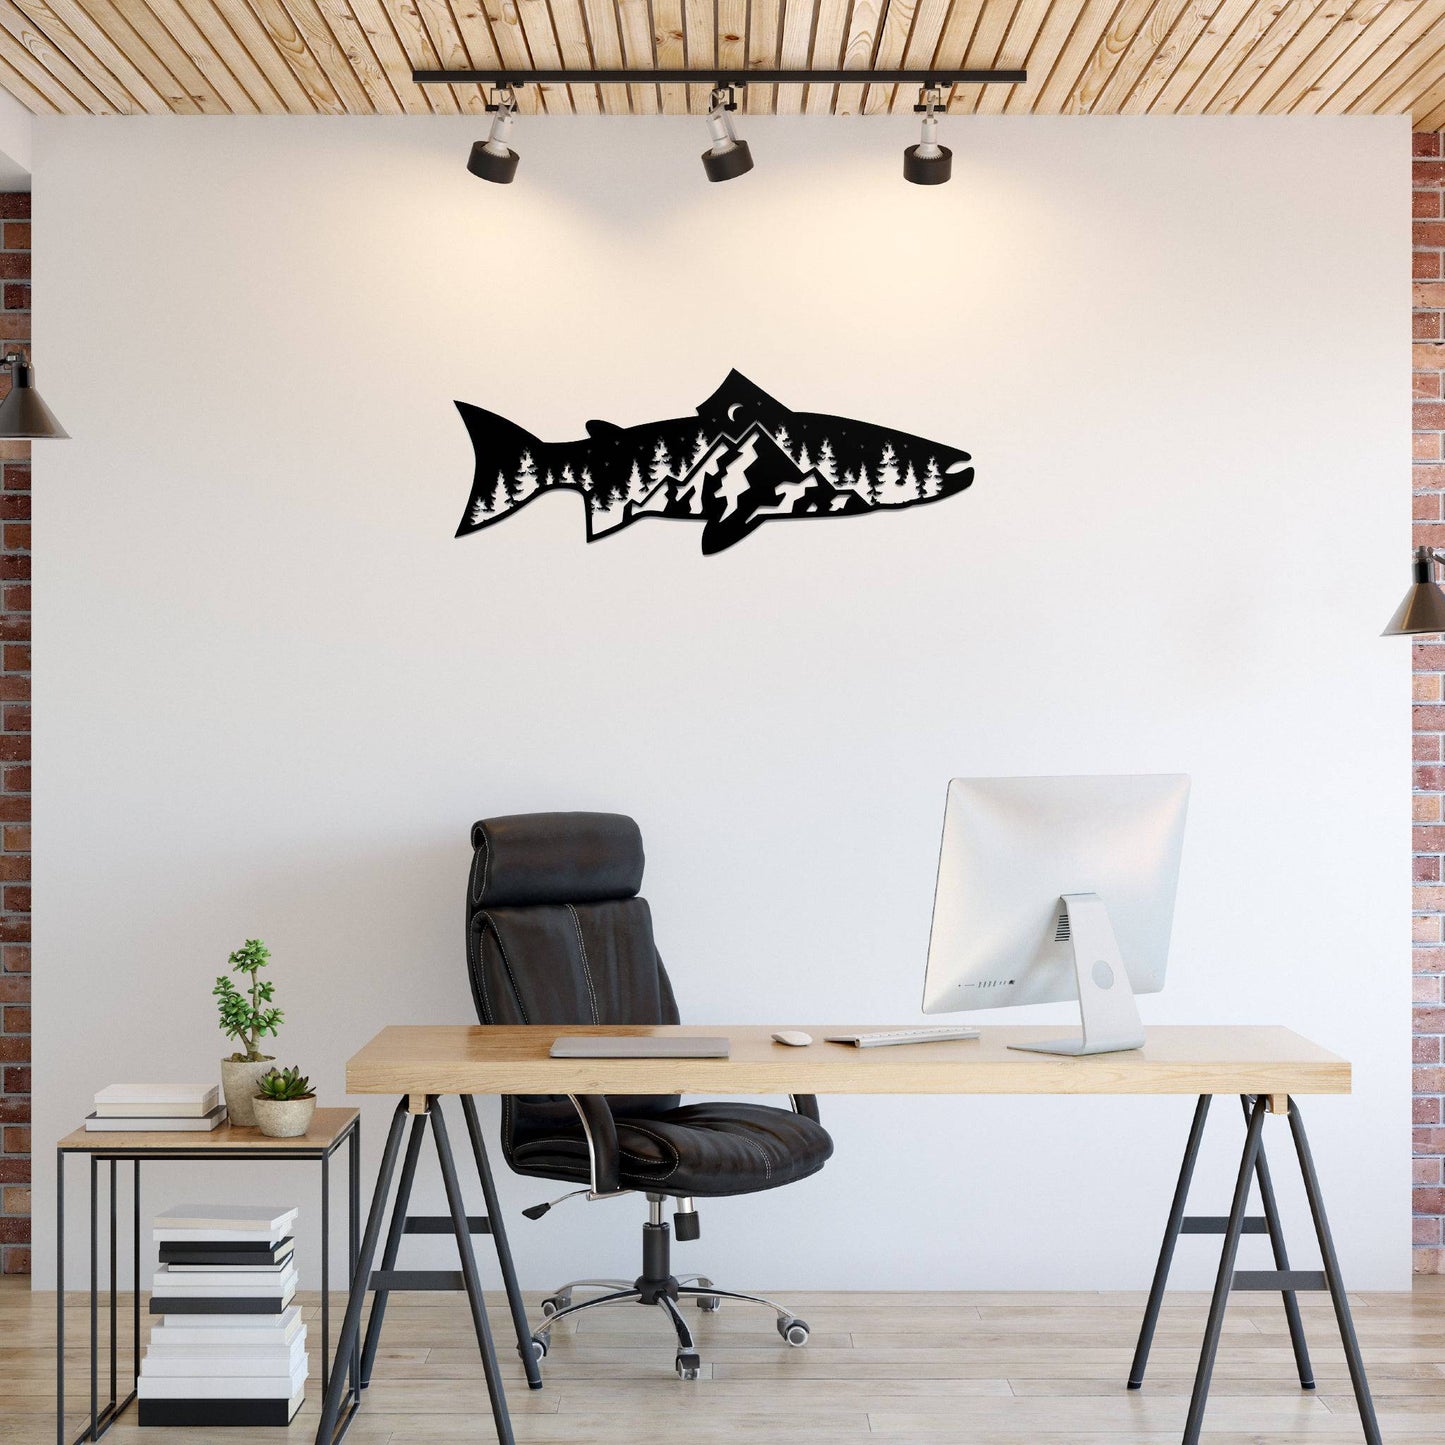 MetalPlex - Trout Fish Design - Metal Wall Art - Angler's Pro Tackle & Outdoors